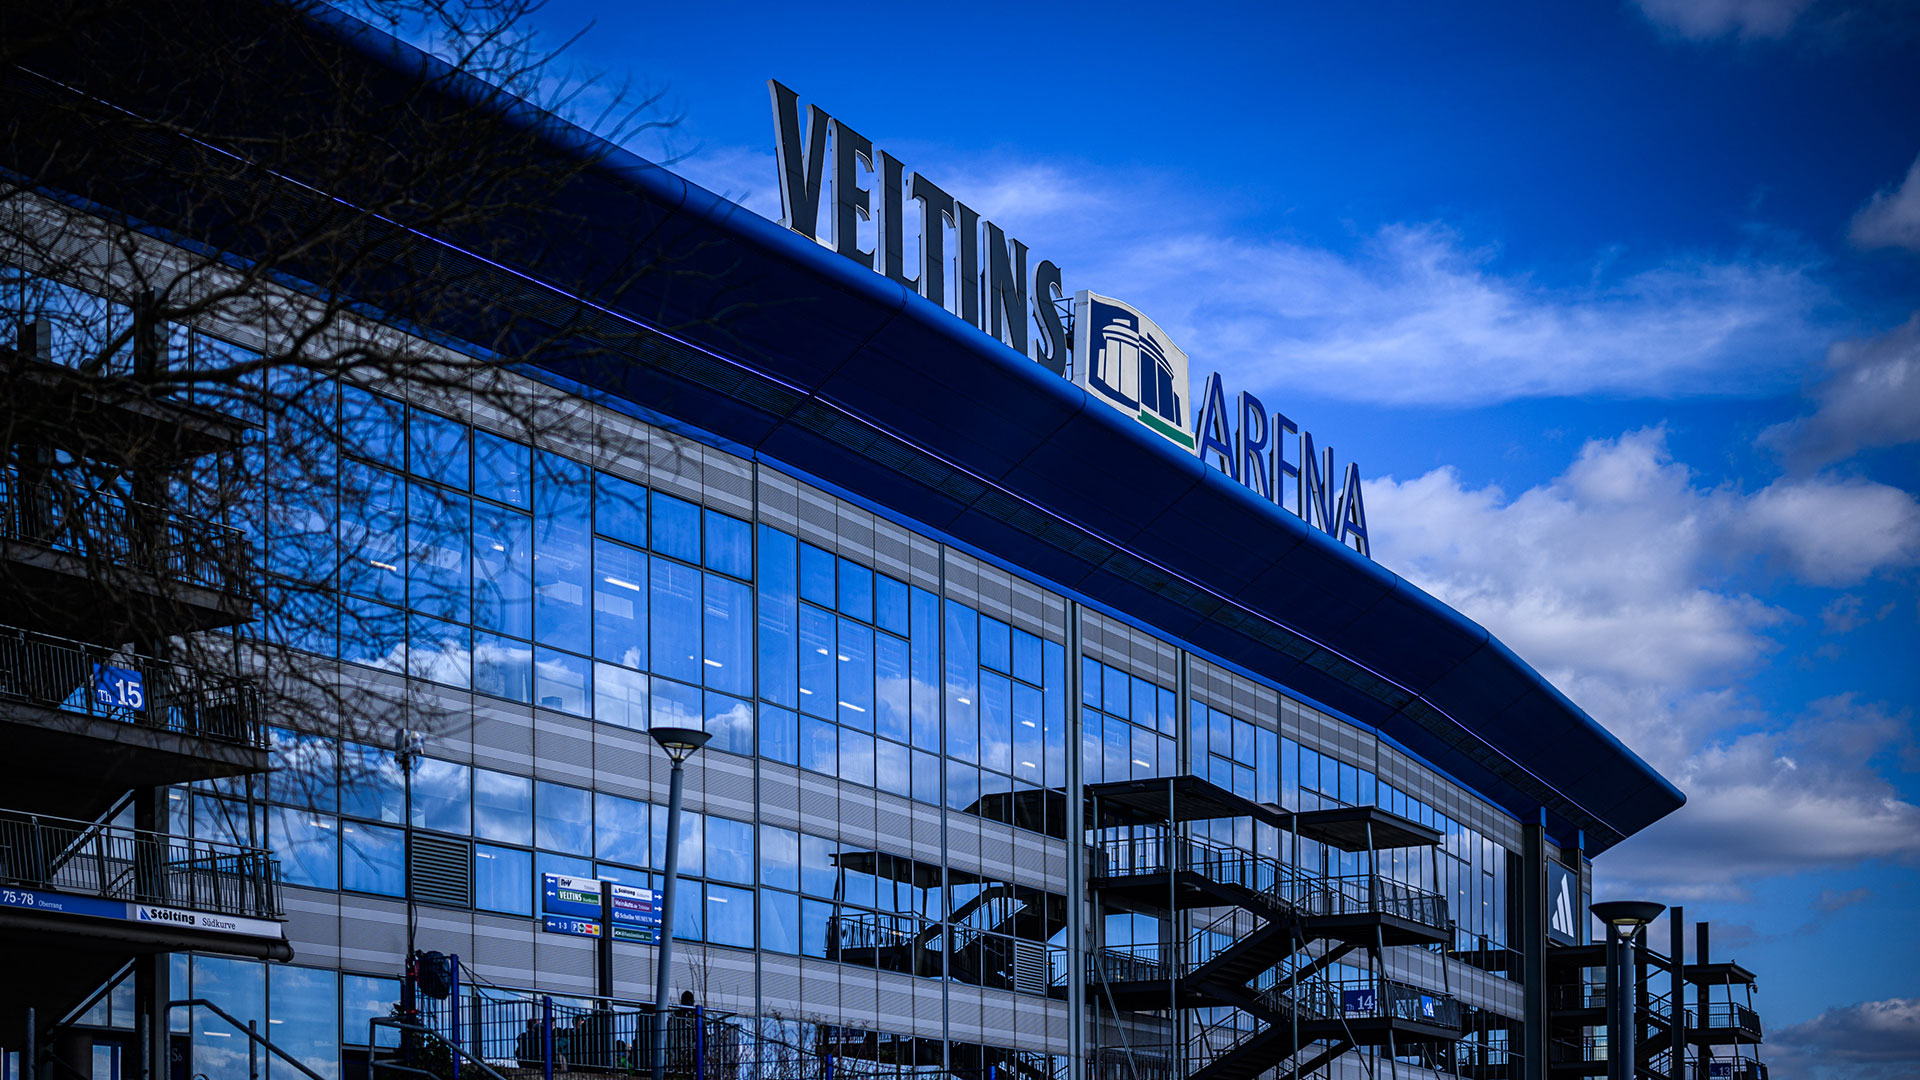 VELTINS-Arena